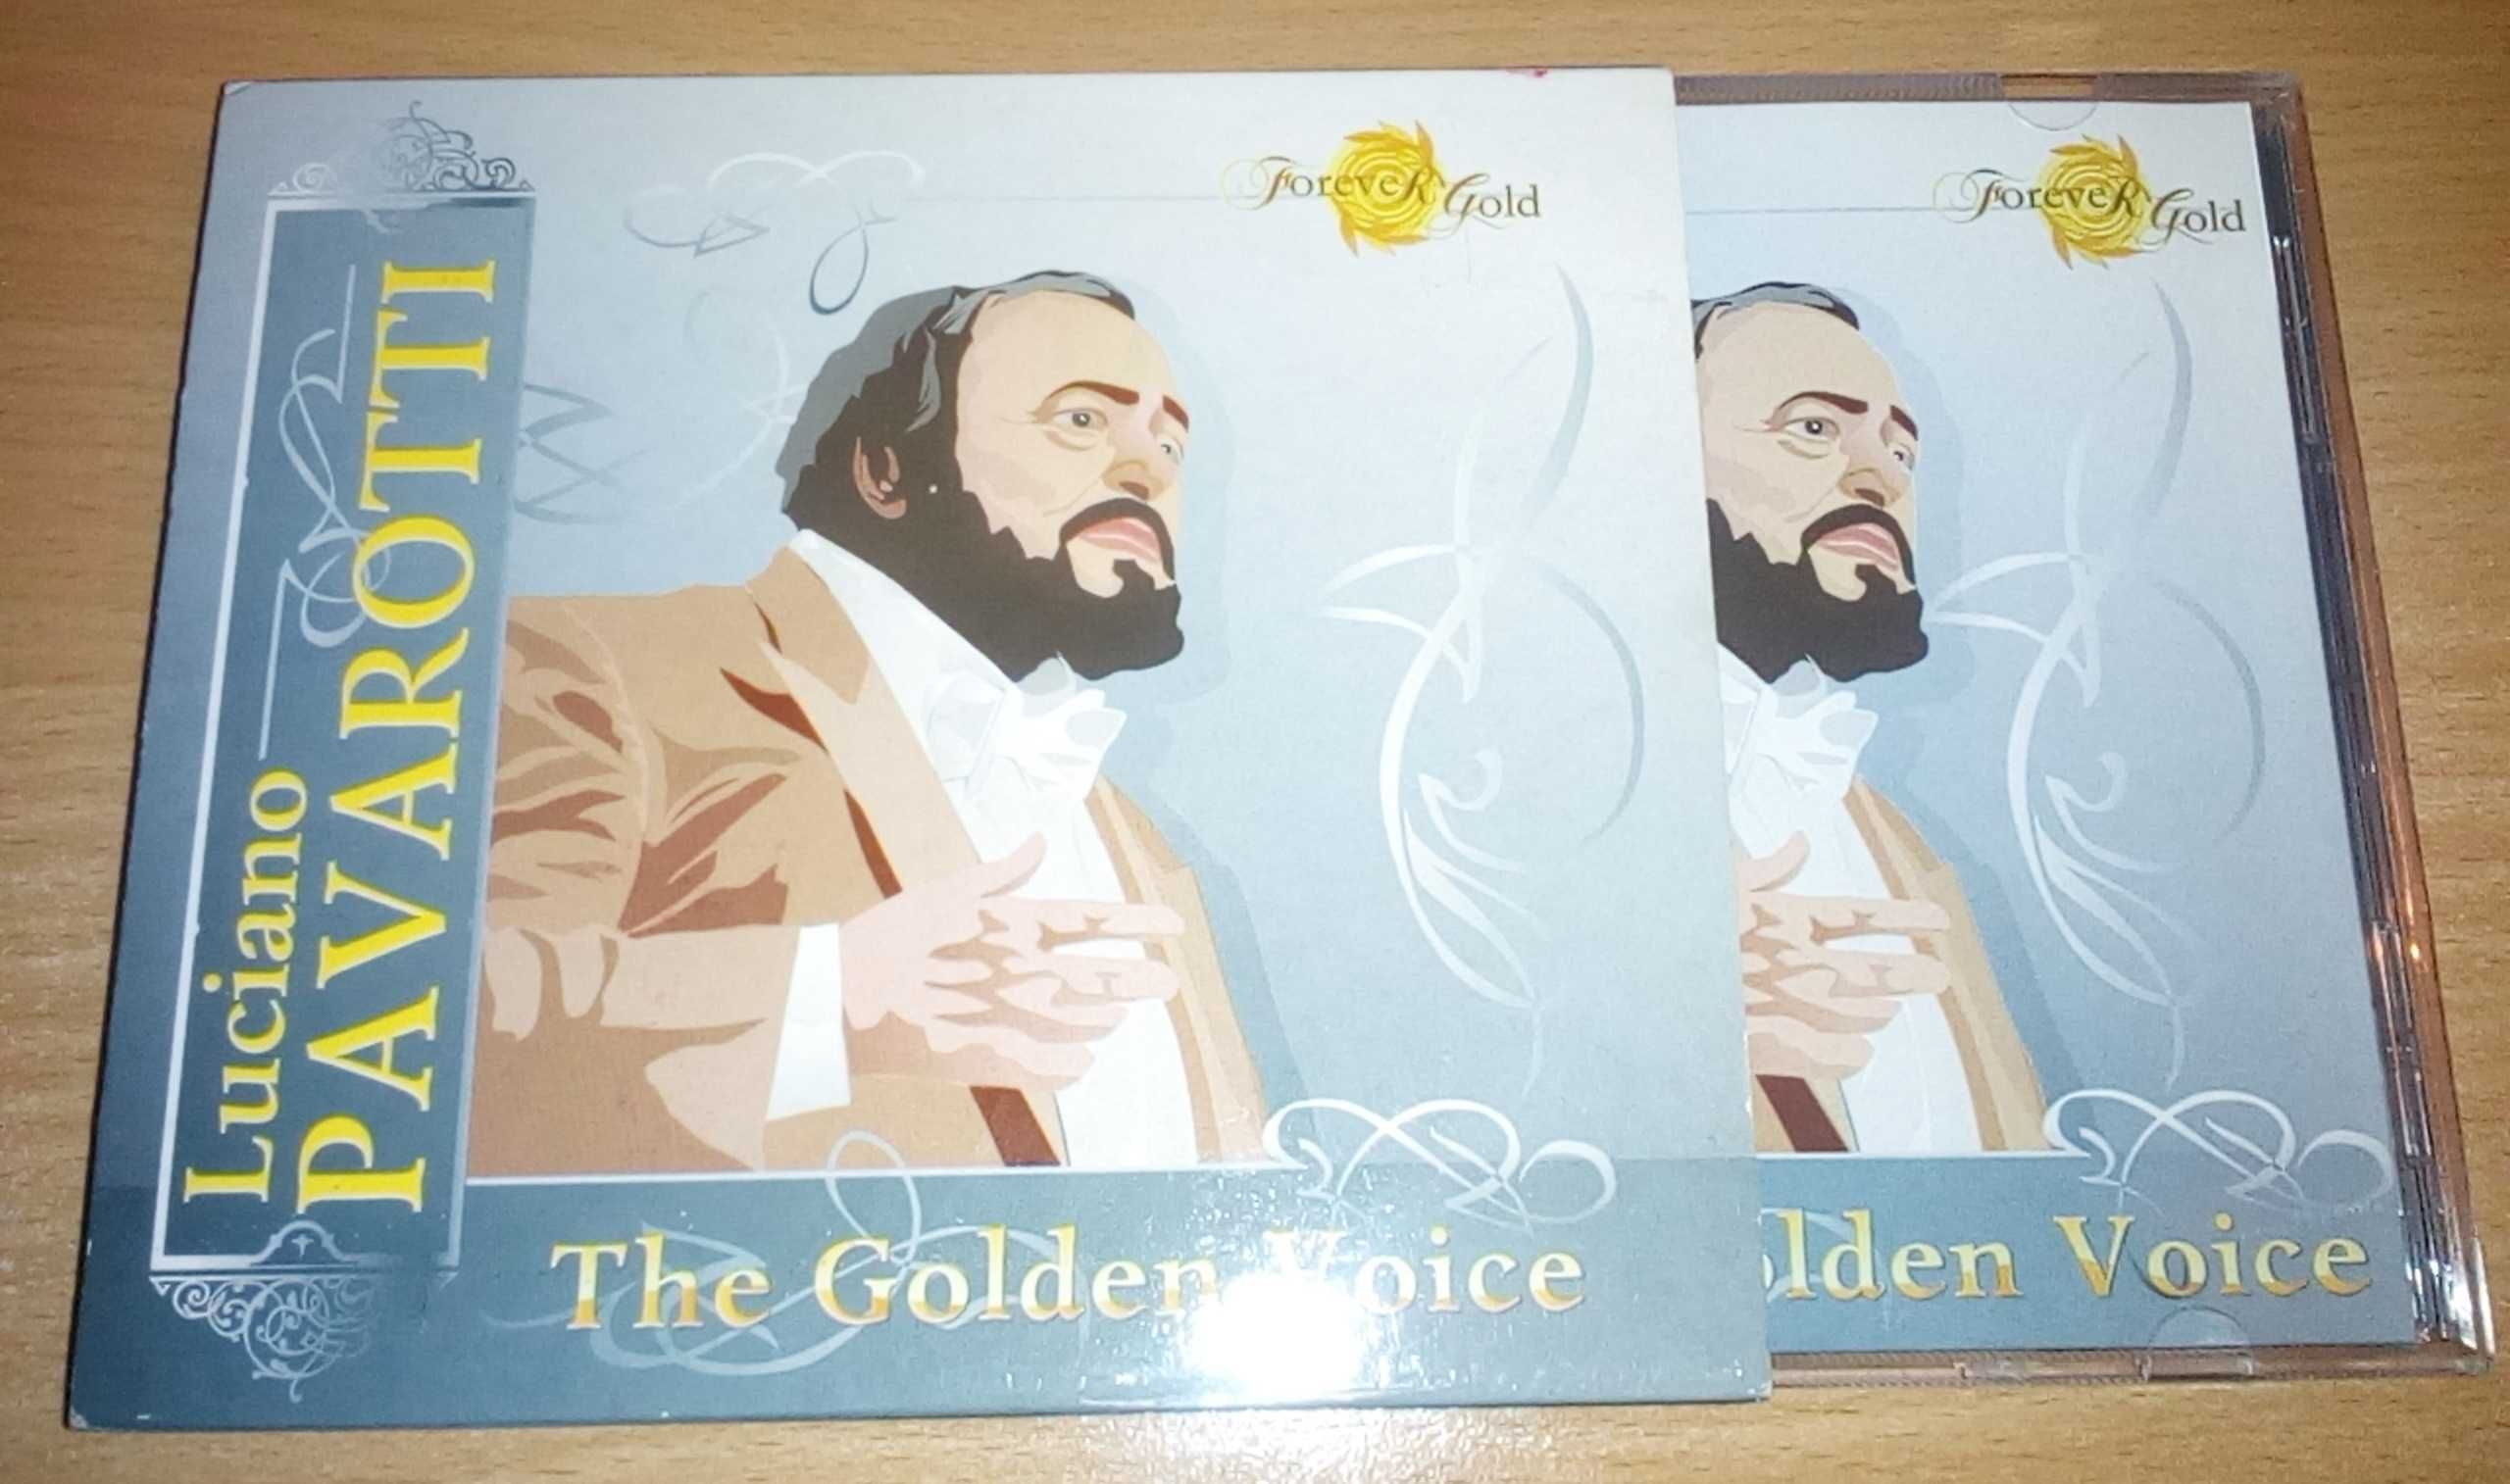 Luciano Pavarotti - The golden voice